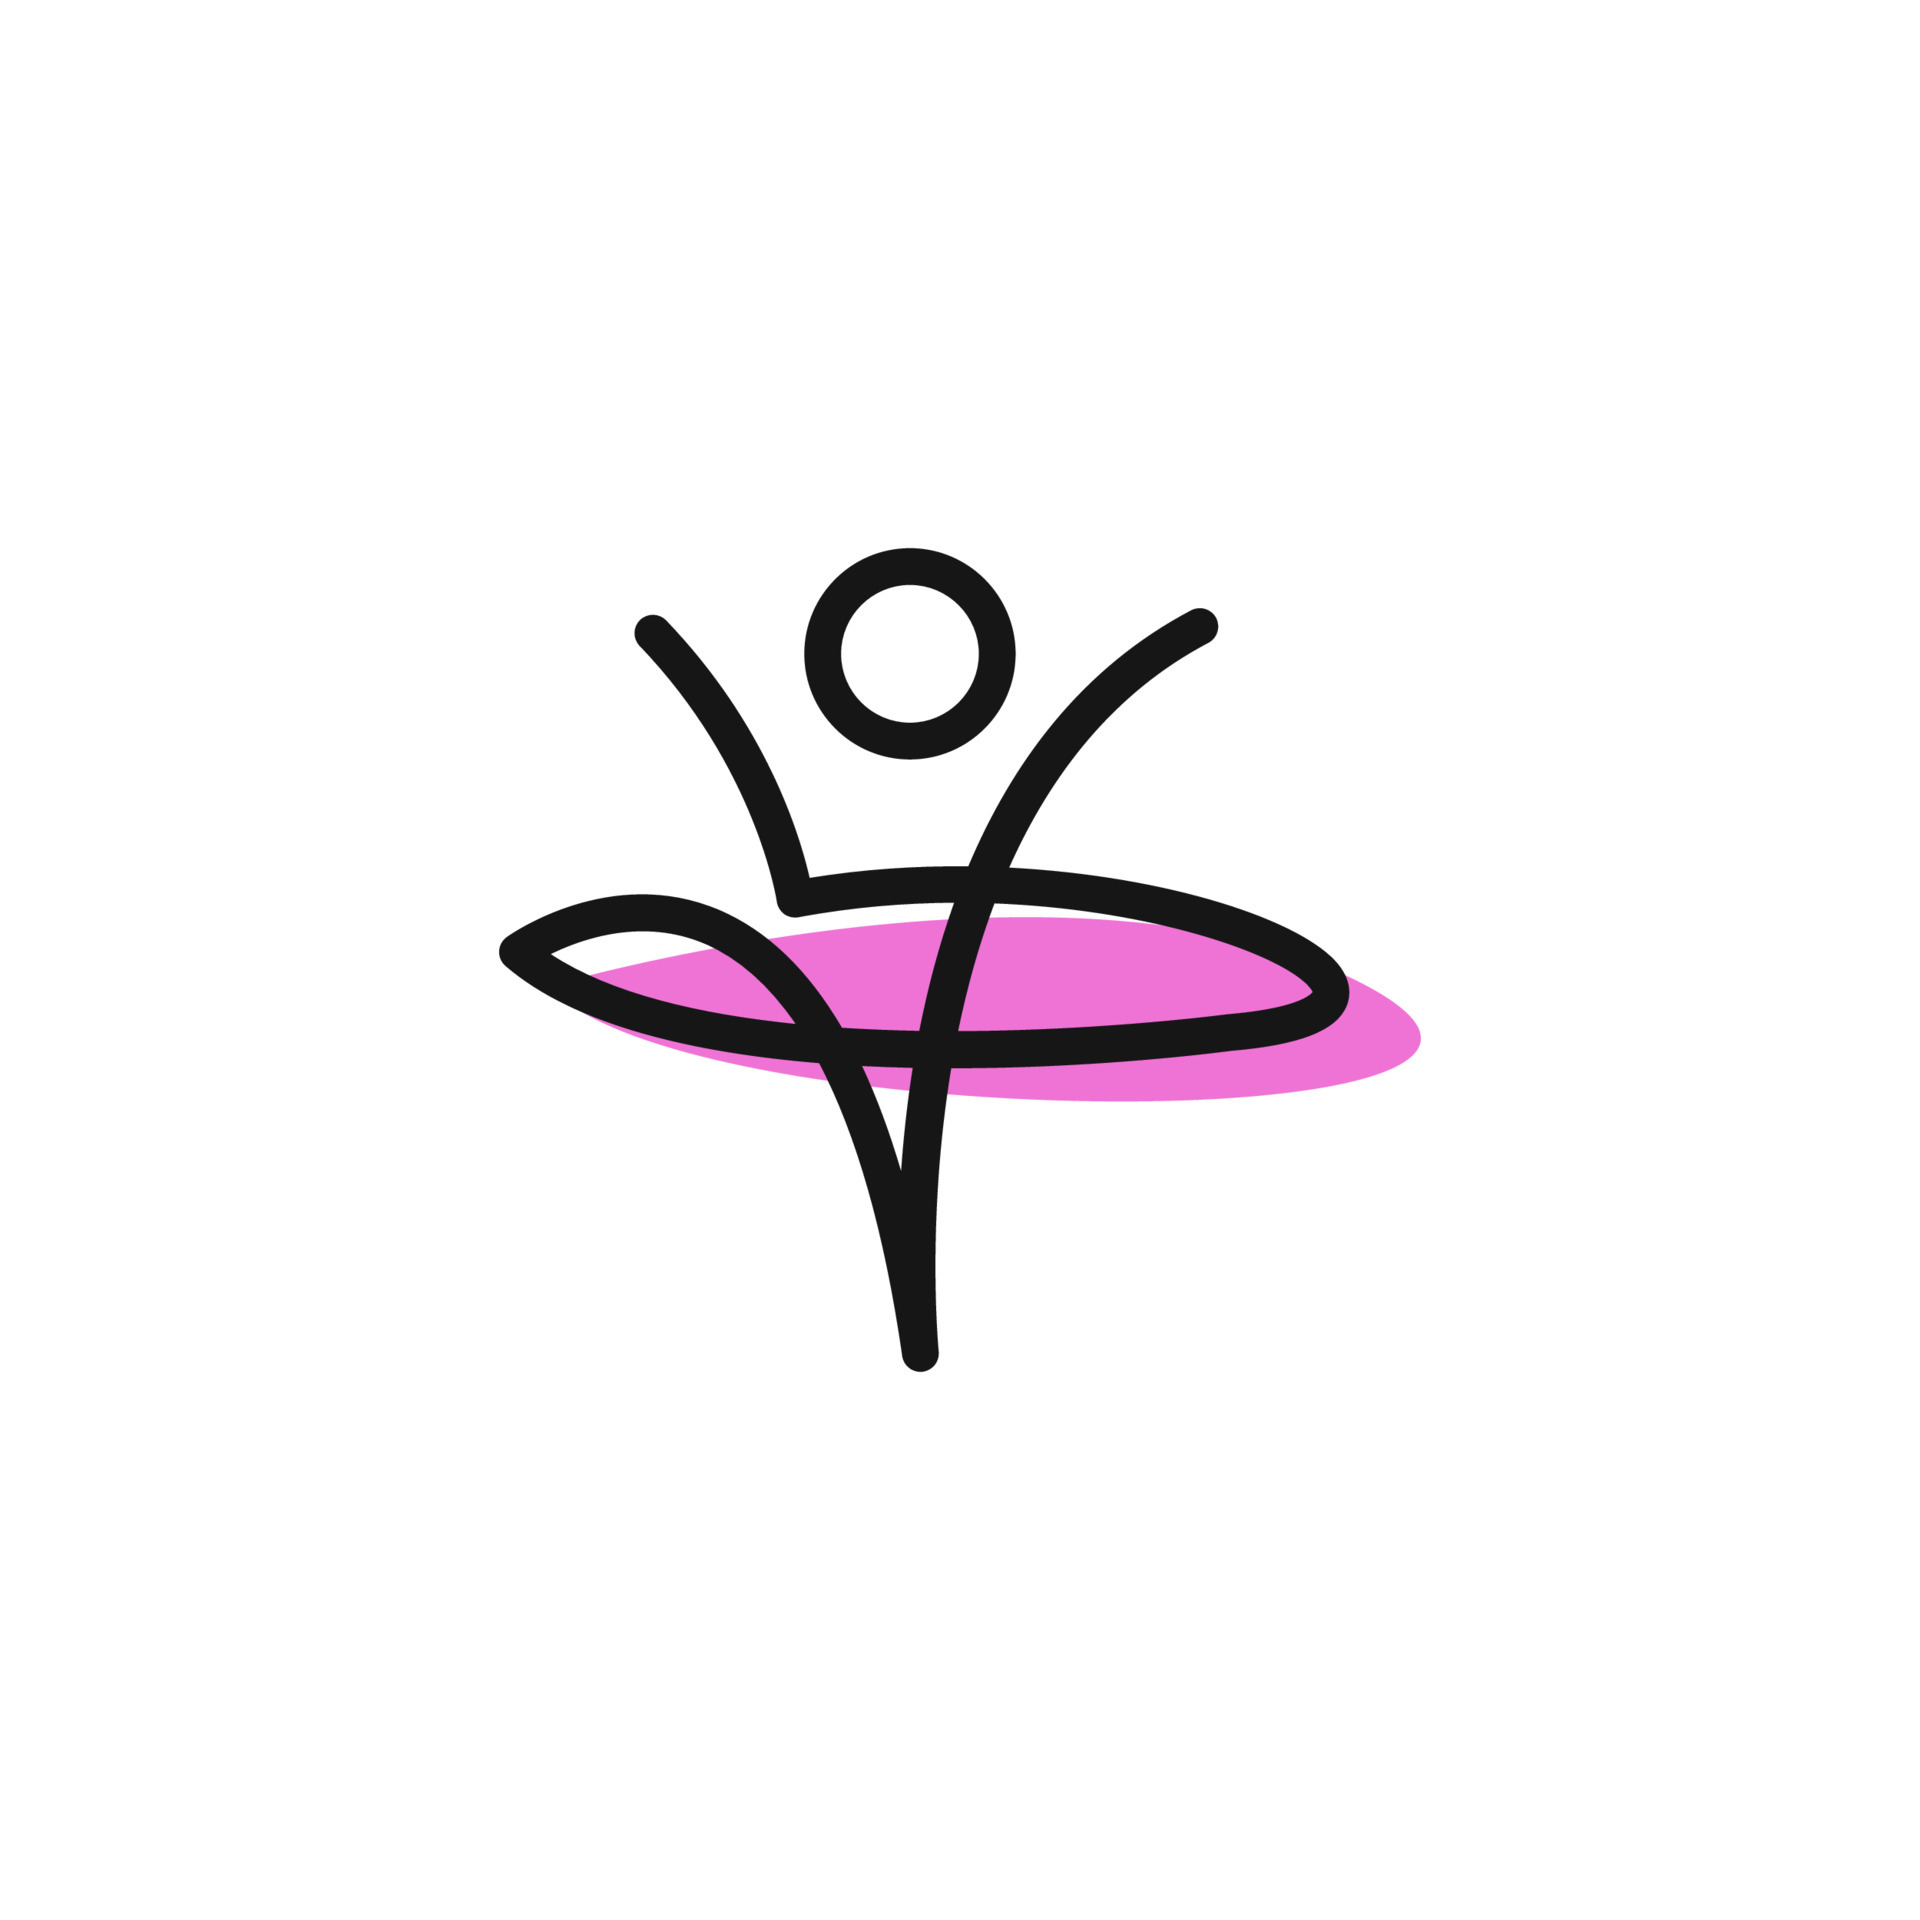 dance logos design